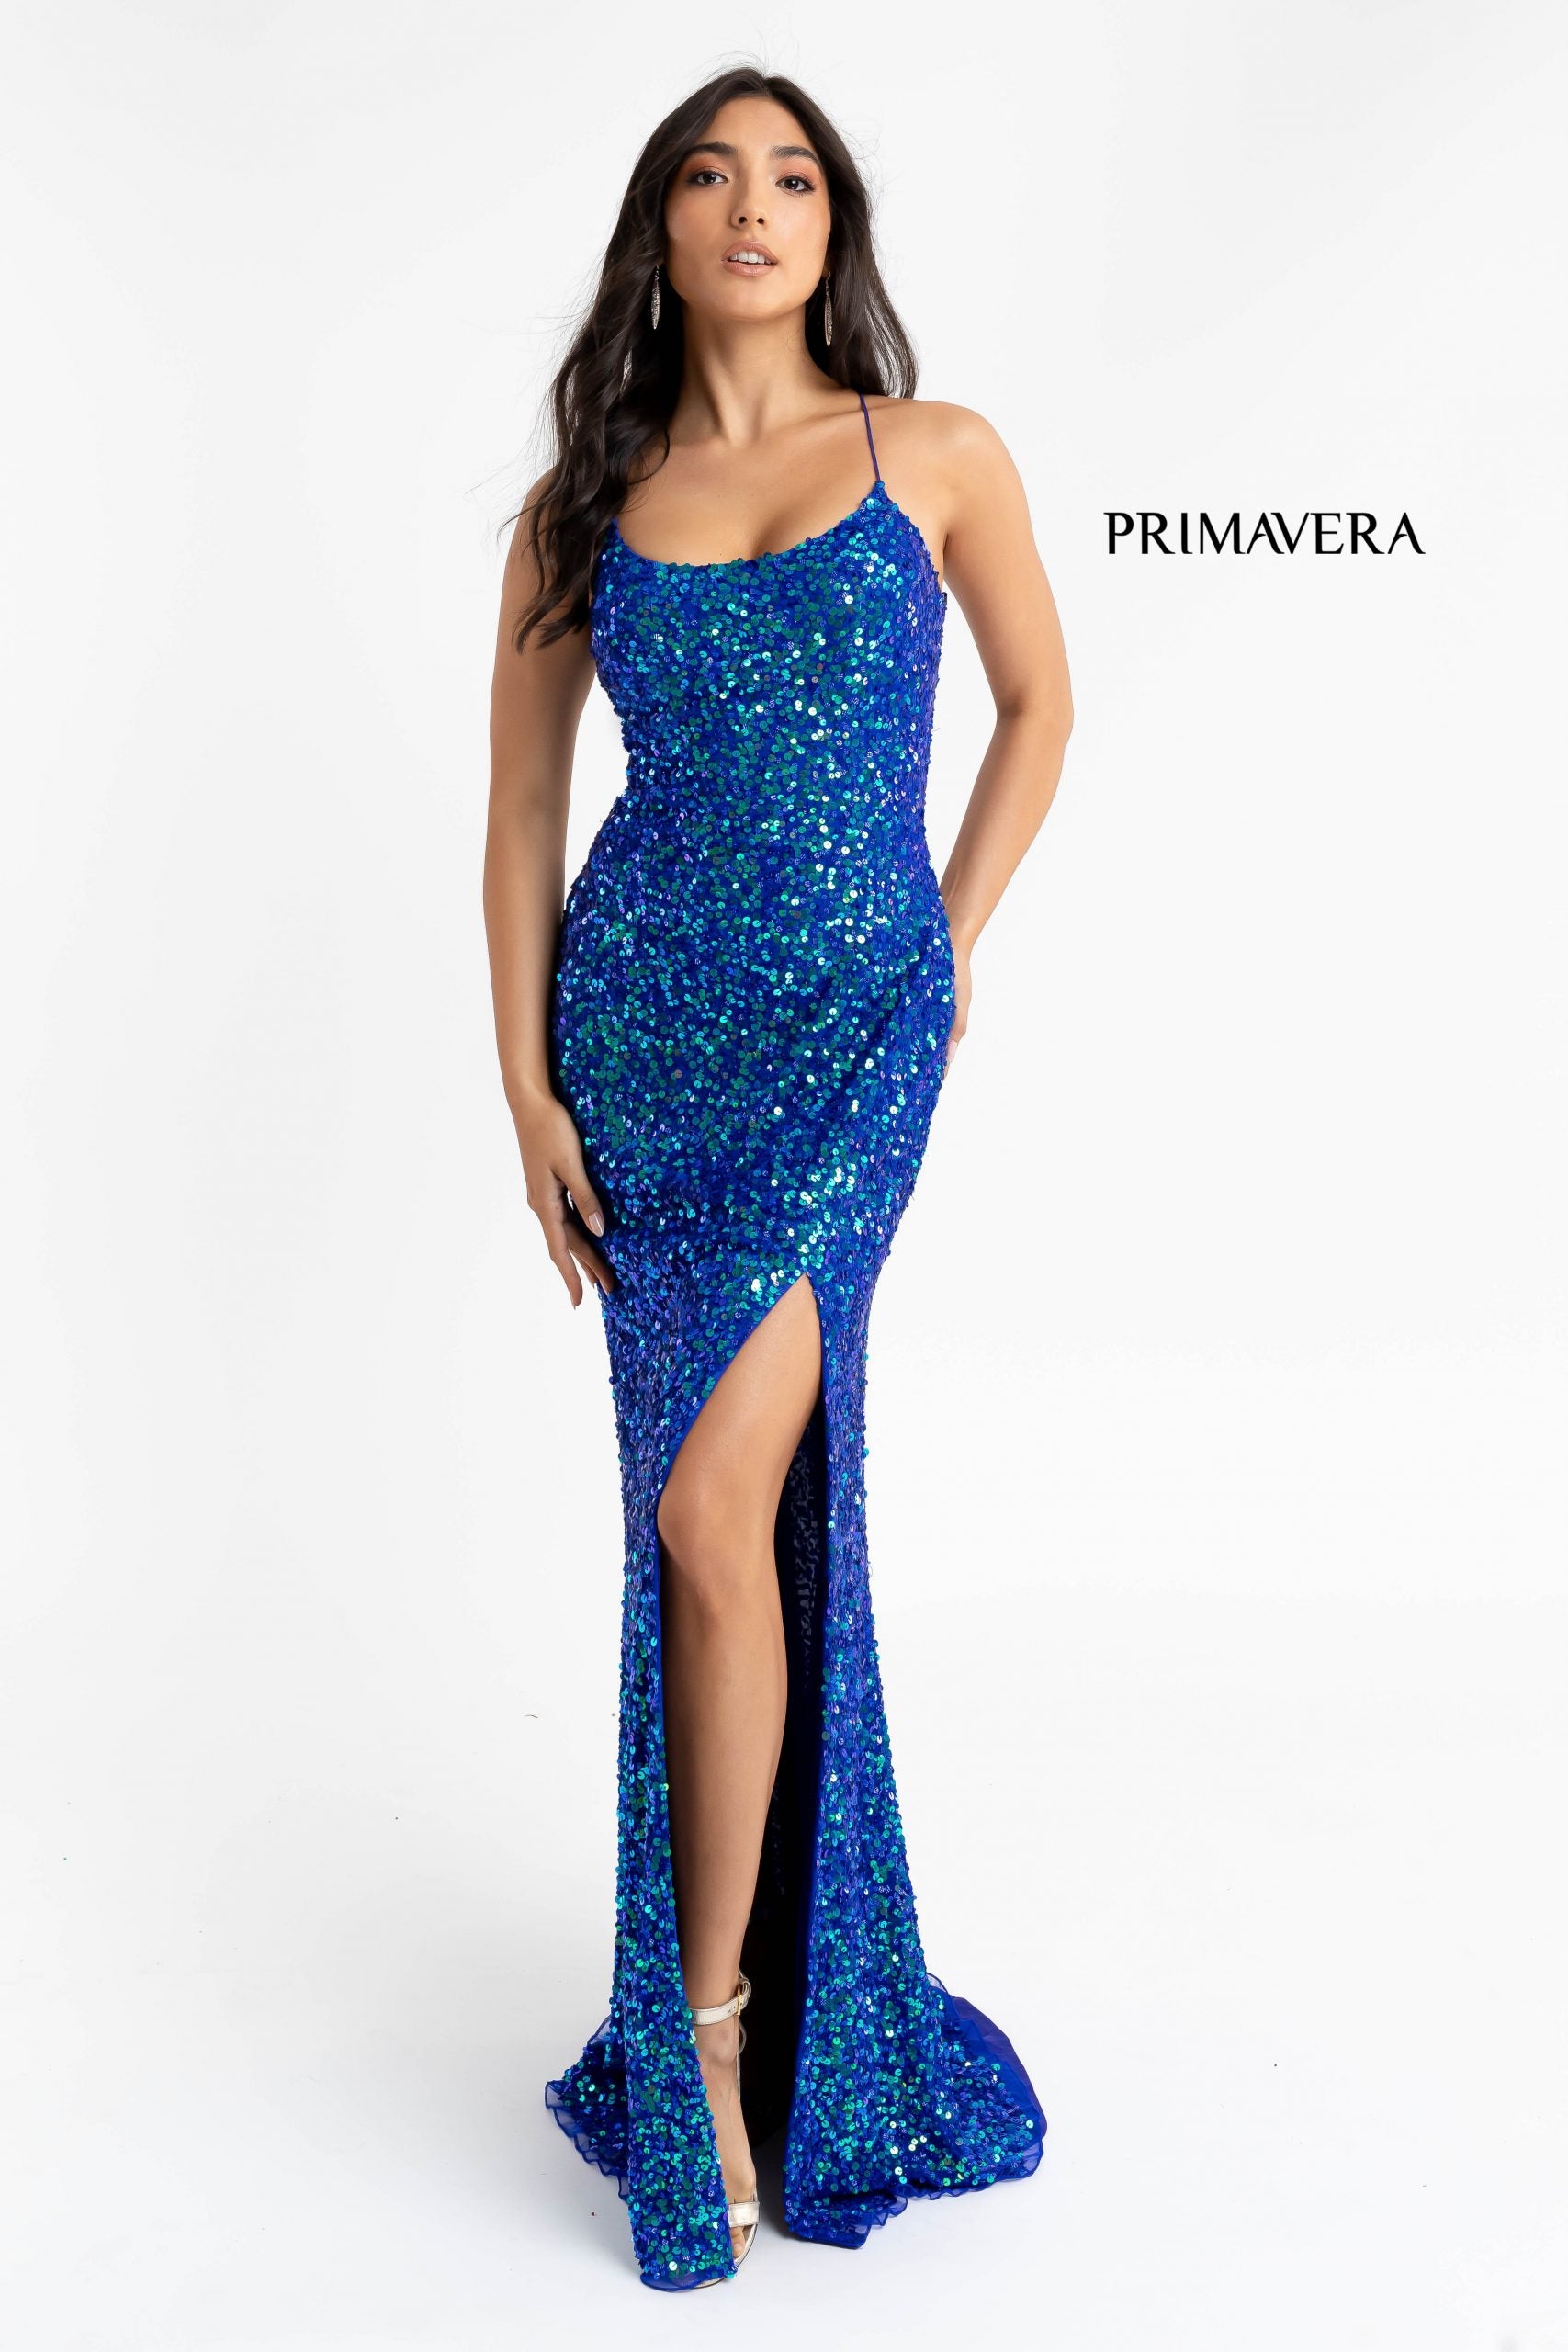 Primavera-Couture-3290-Blue-Prom-Dress-Scoop-neckline-sequins-long-evening-gown-lace-up-back-side-slit